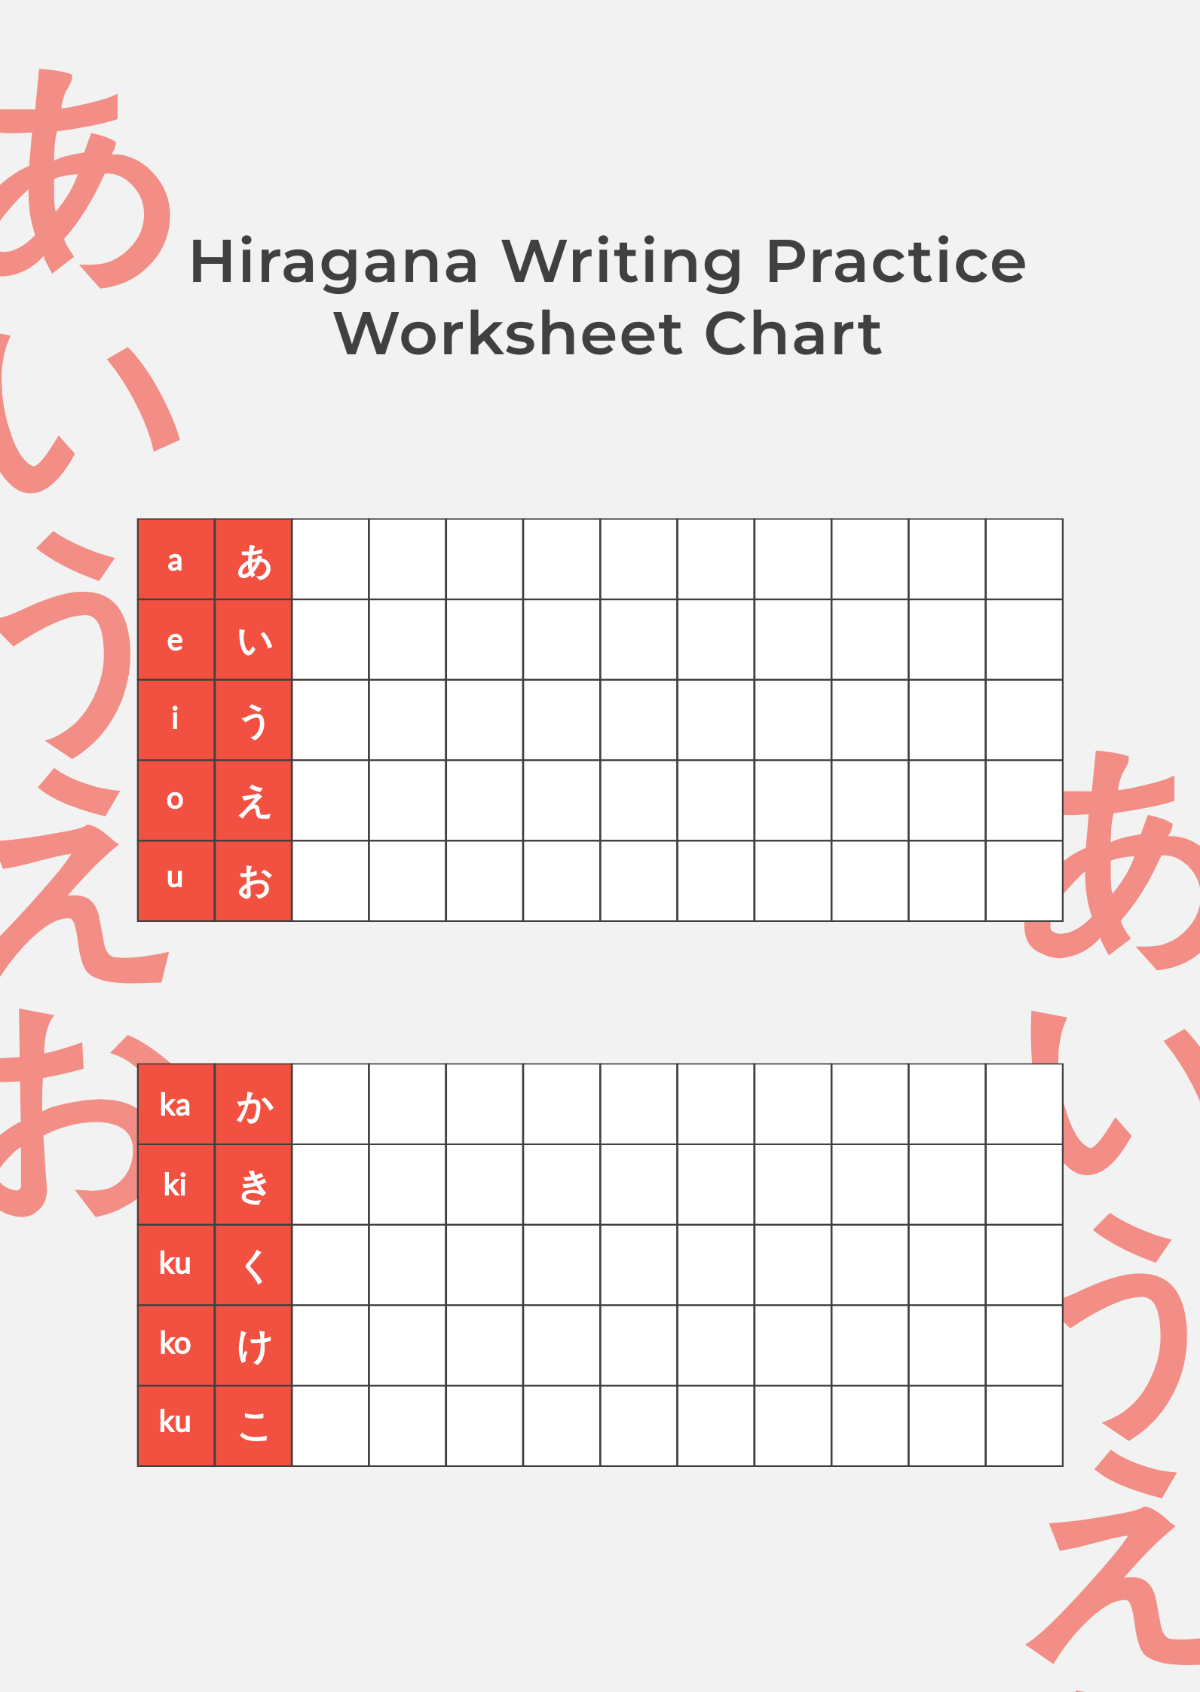 Hiragana Writing Practice Worksheet Chart Template